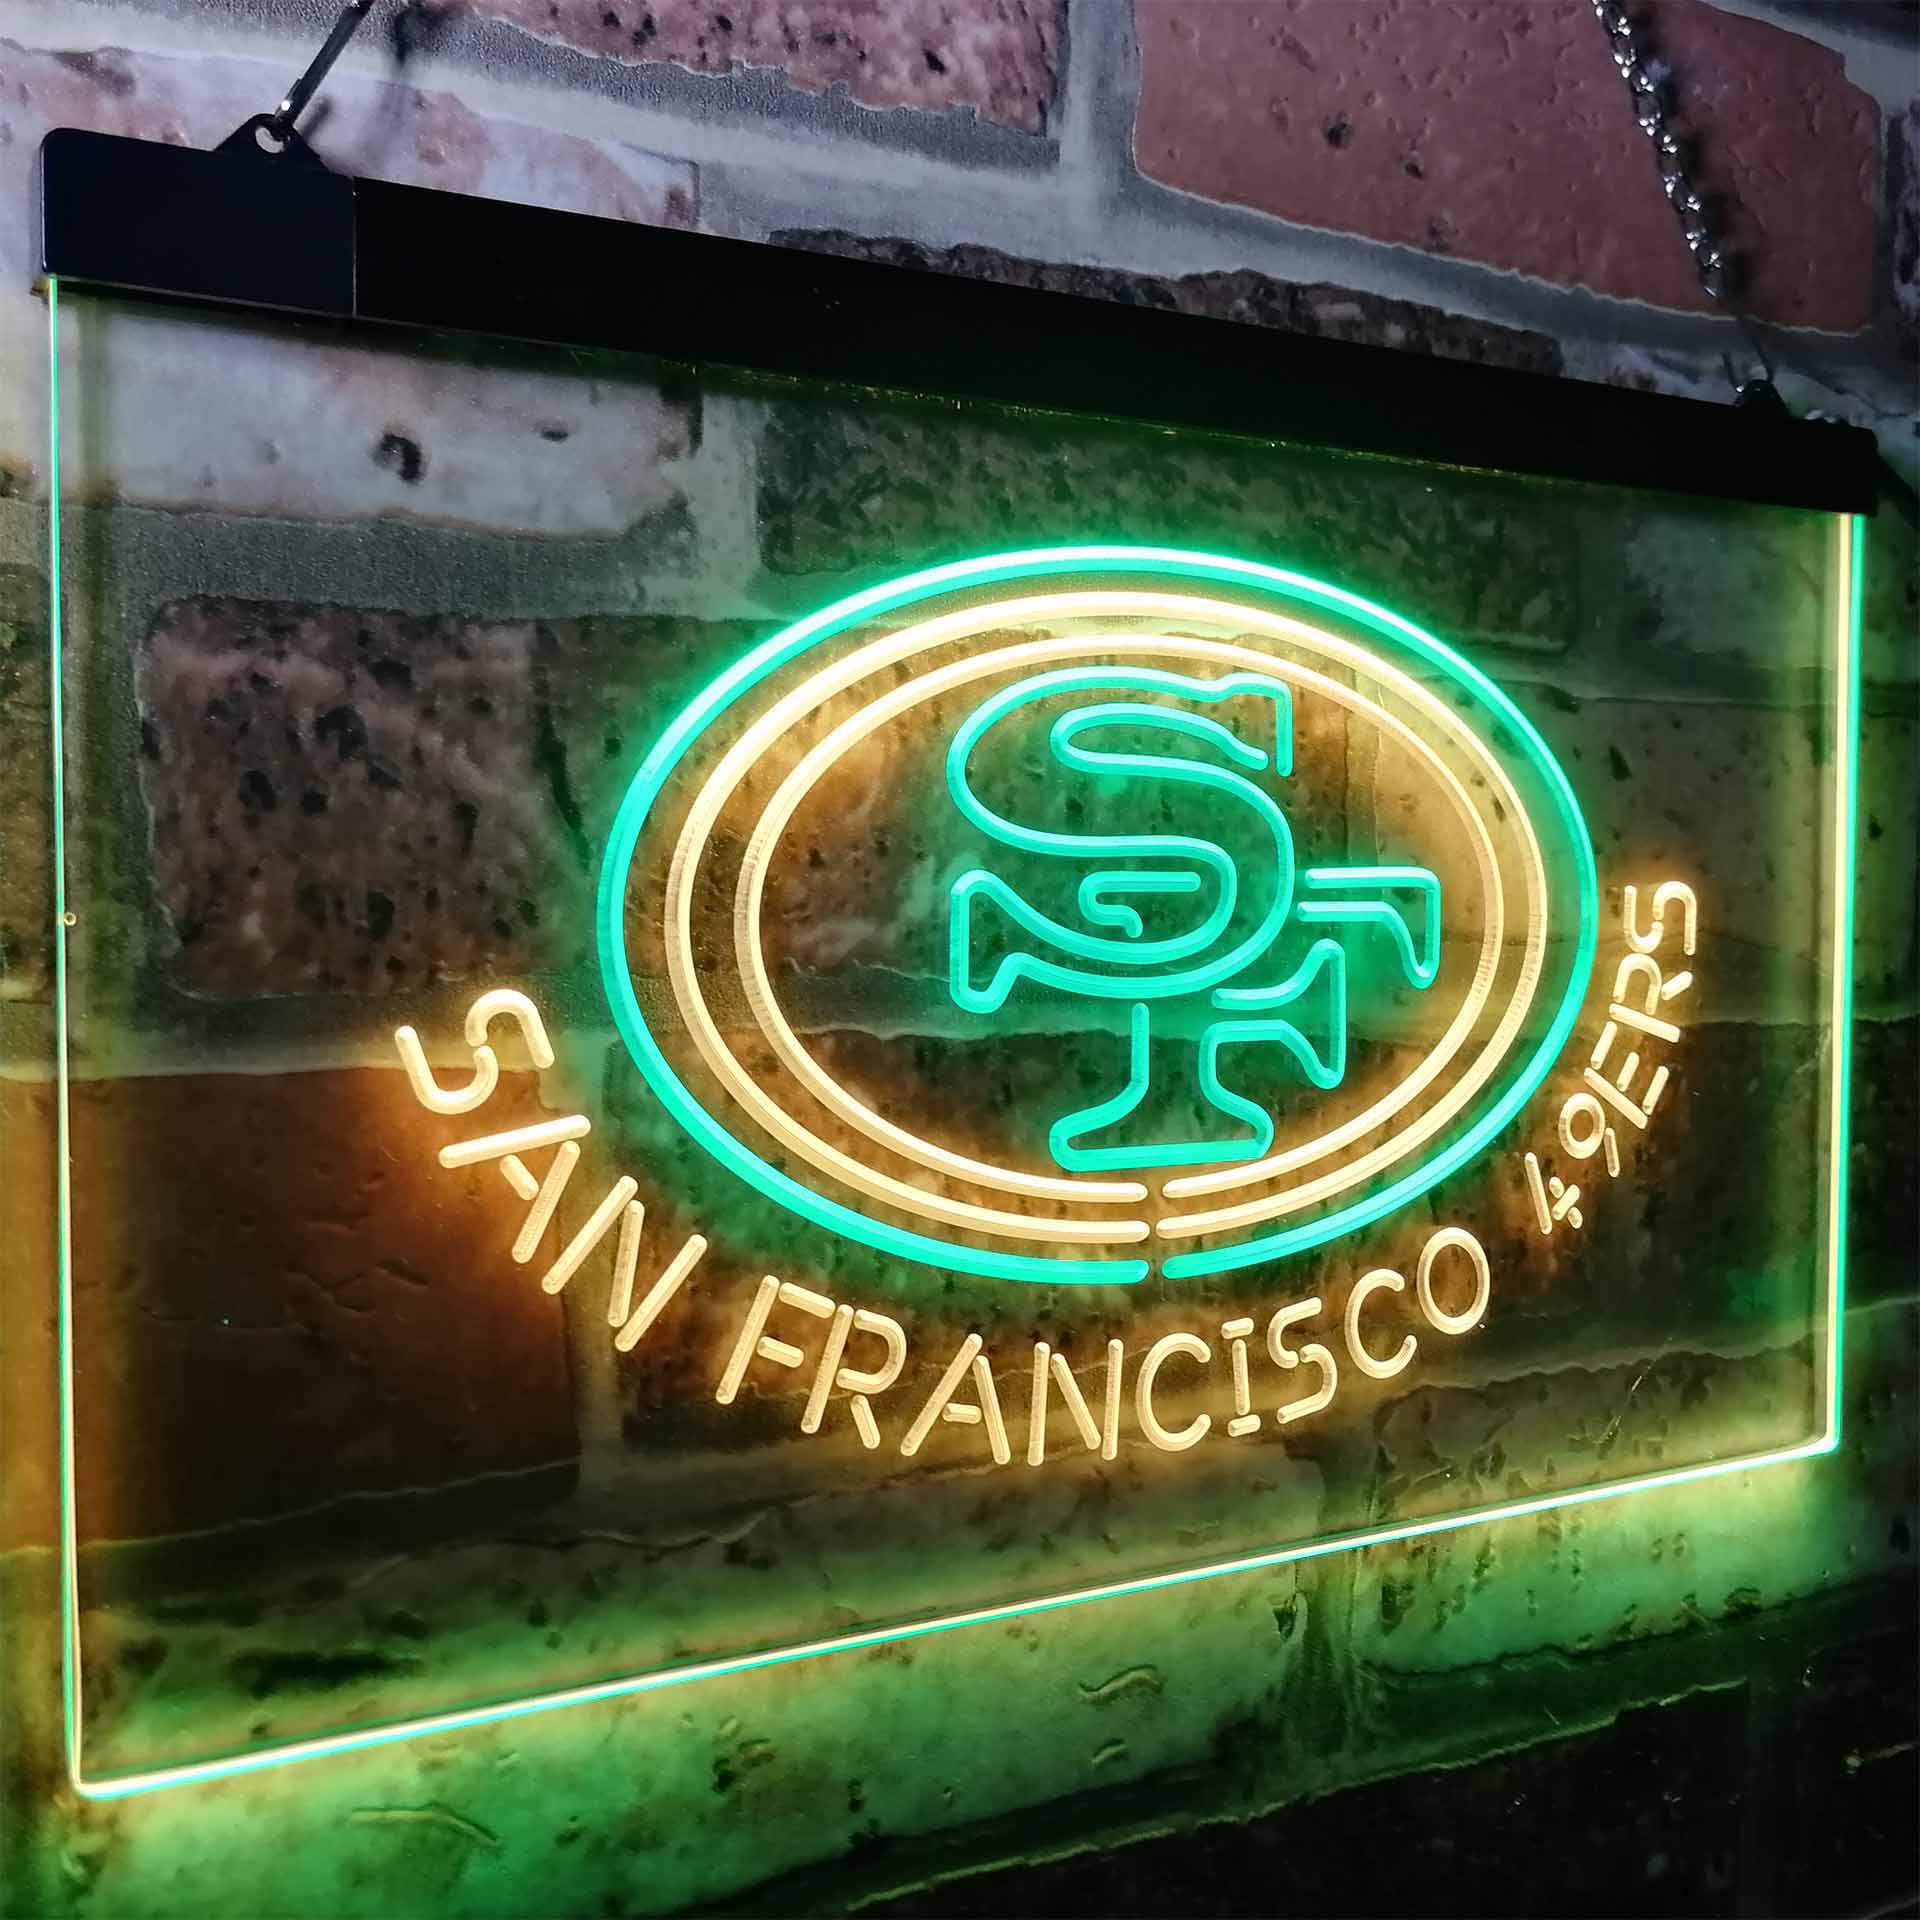 San Francisco 49ers Decor LED Neon Sign